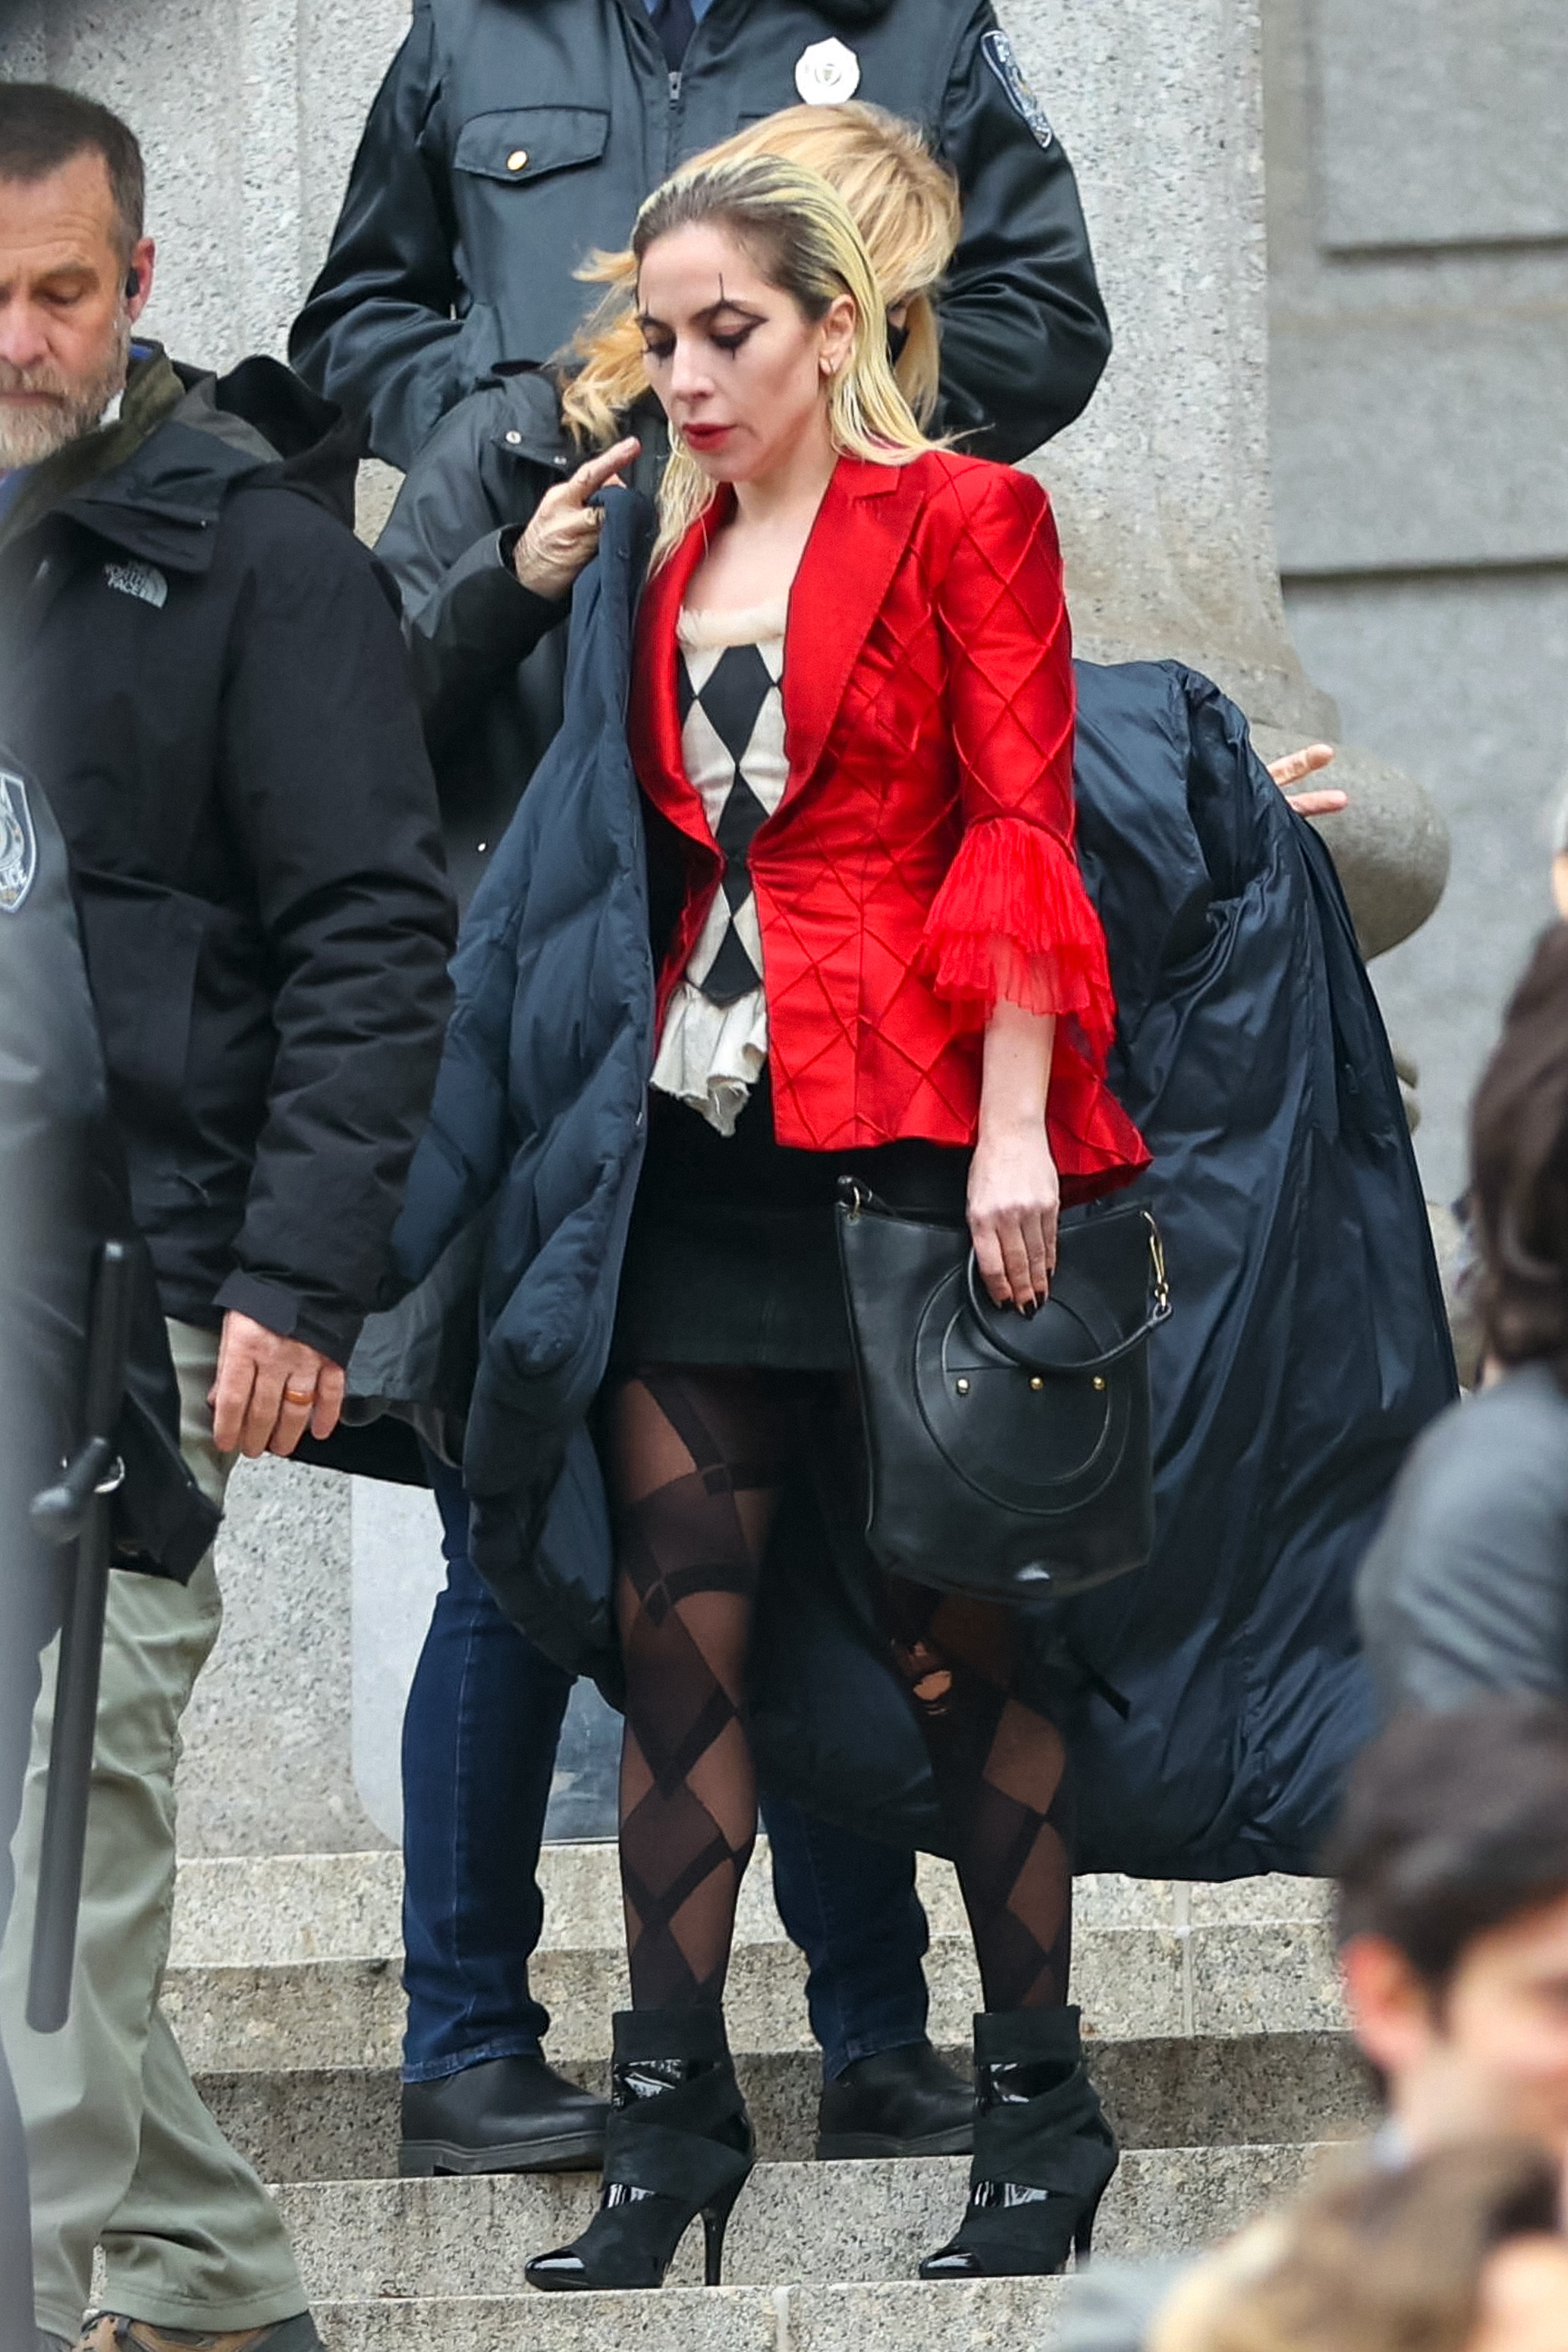 Joker 2 Set Photos Show Lady Gagas Harley Quinn Outfit In Folie à Deux 8326